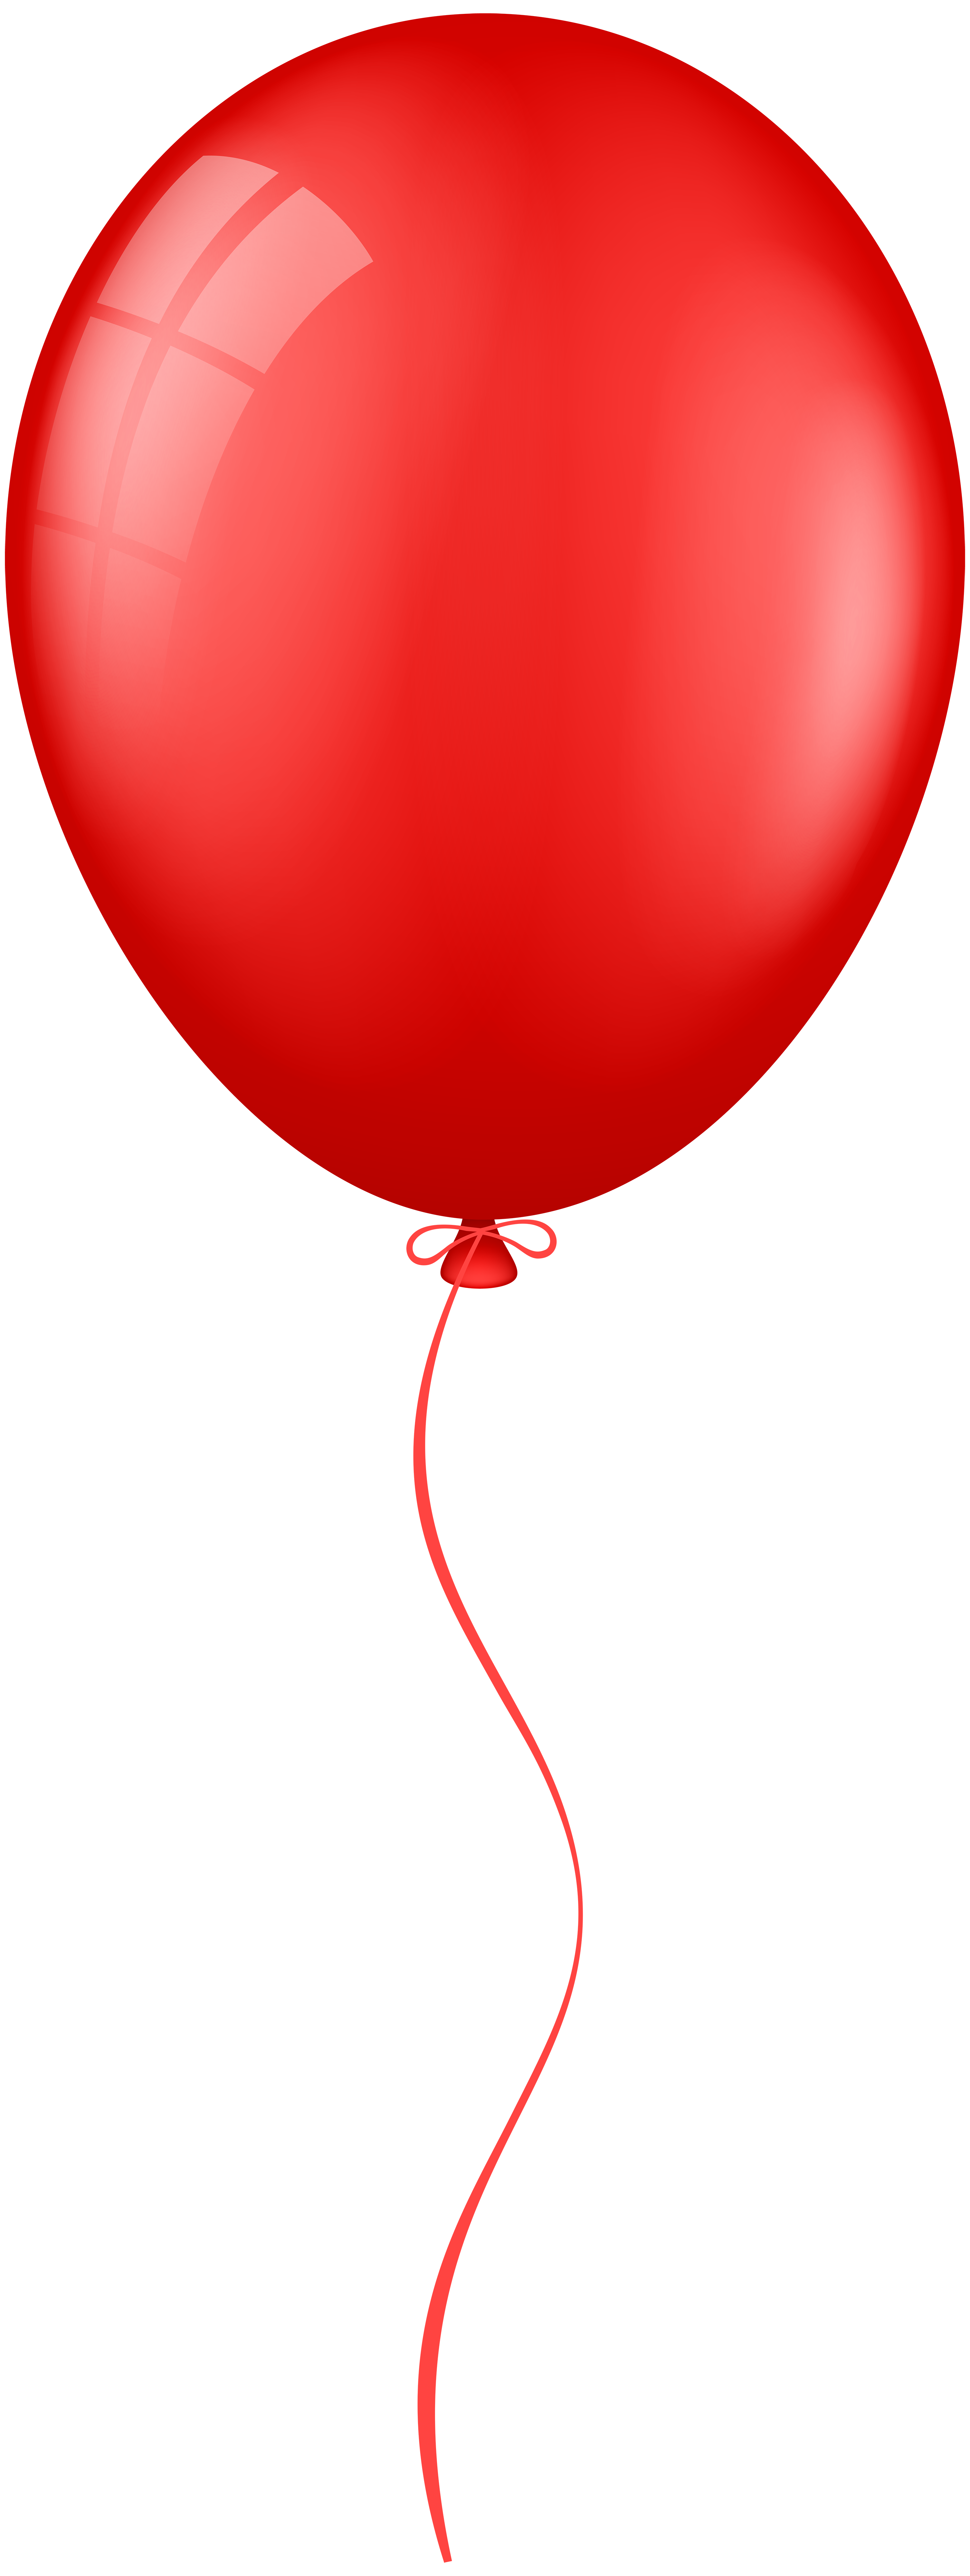 red balloon clip art free - photo #42